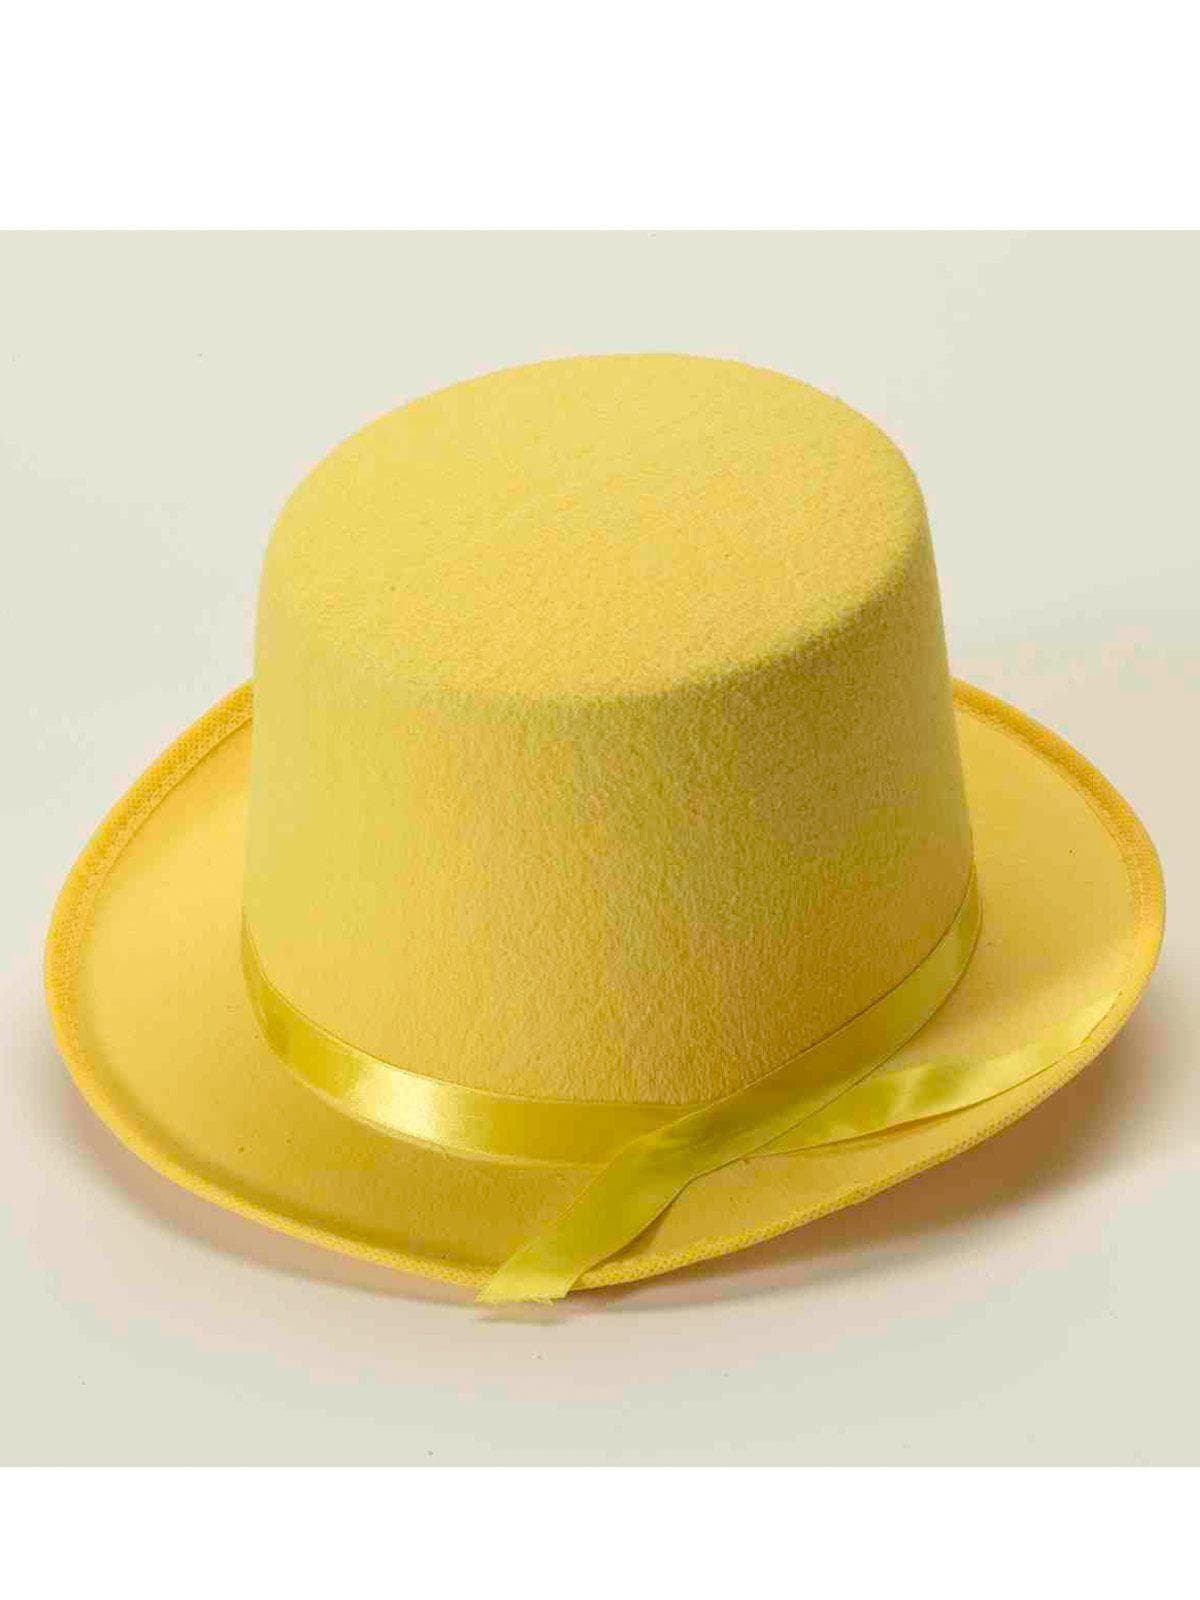 Adult Yellow Classic Top Hat - costumes.com